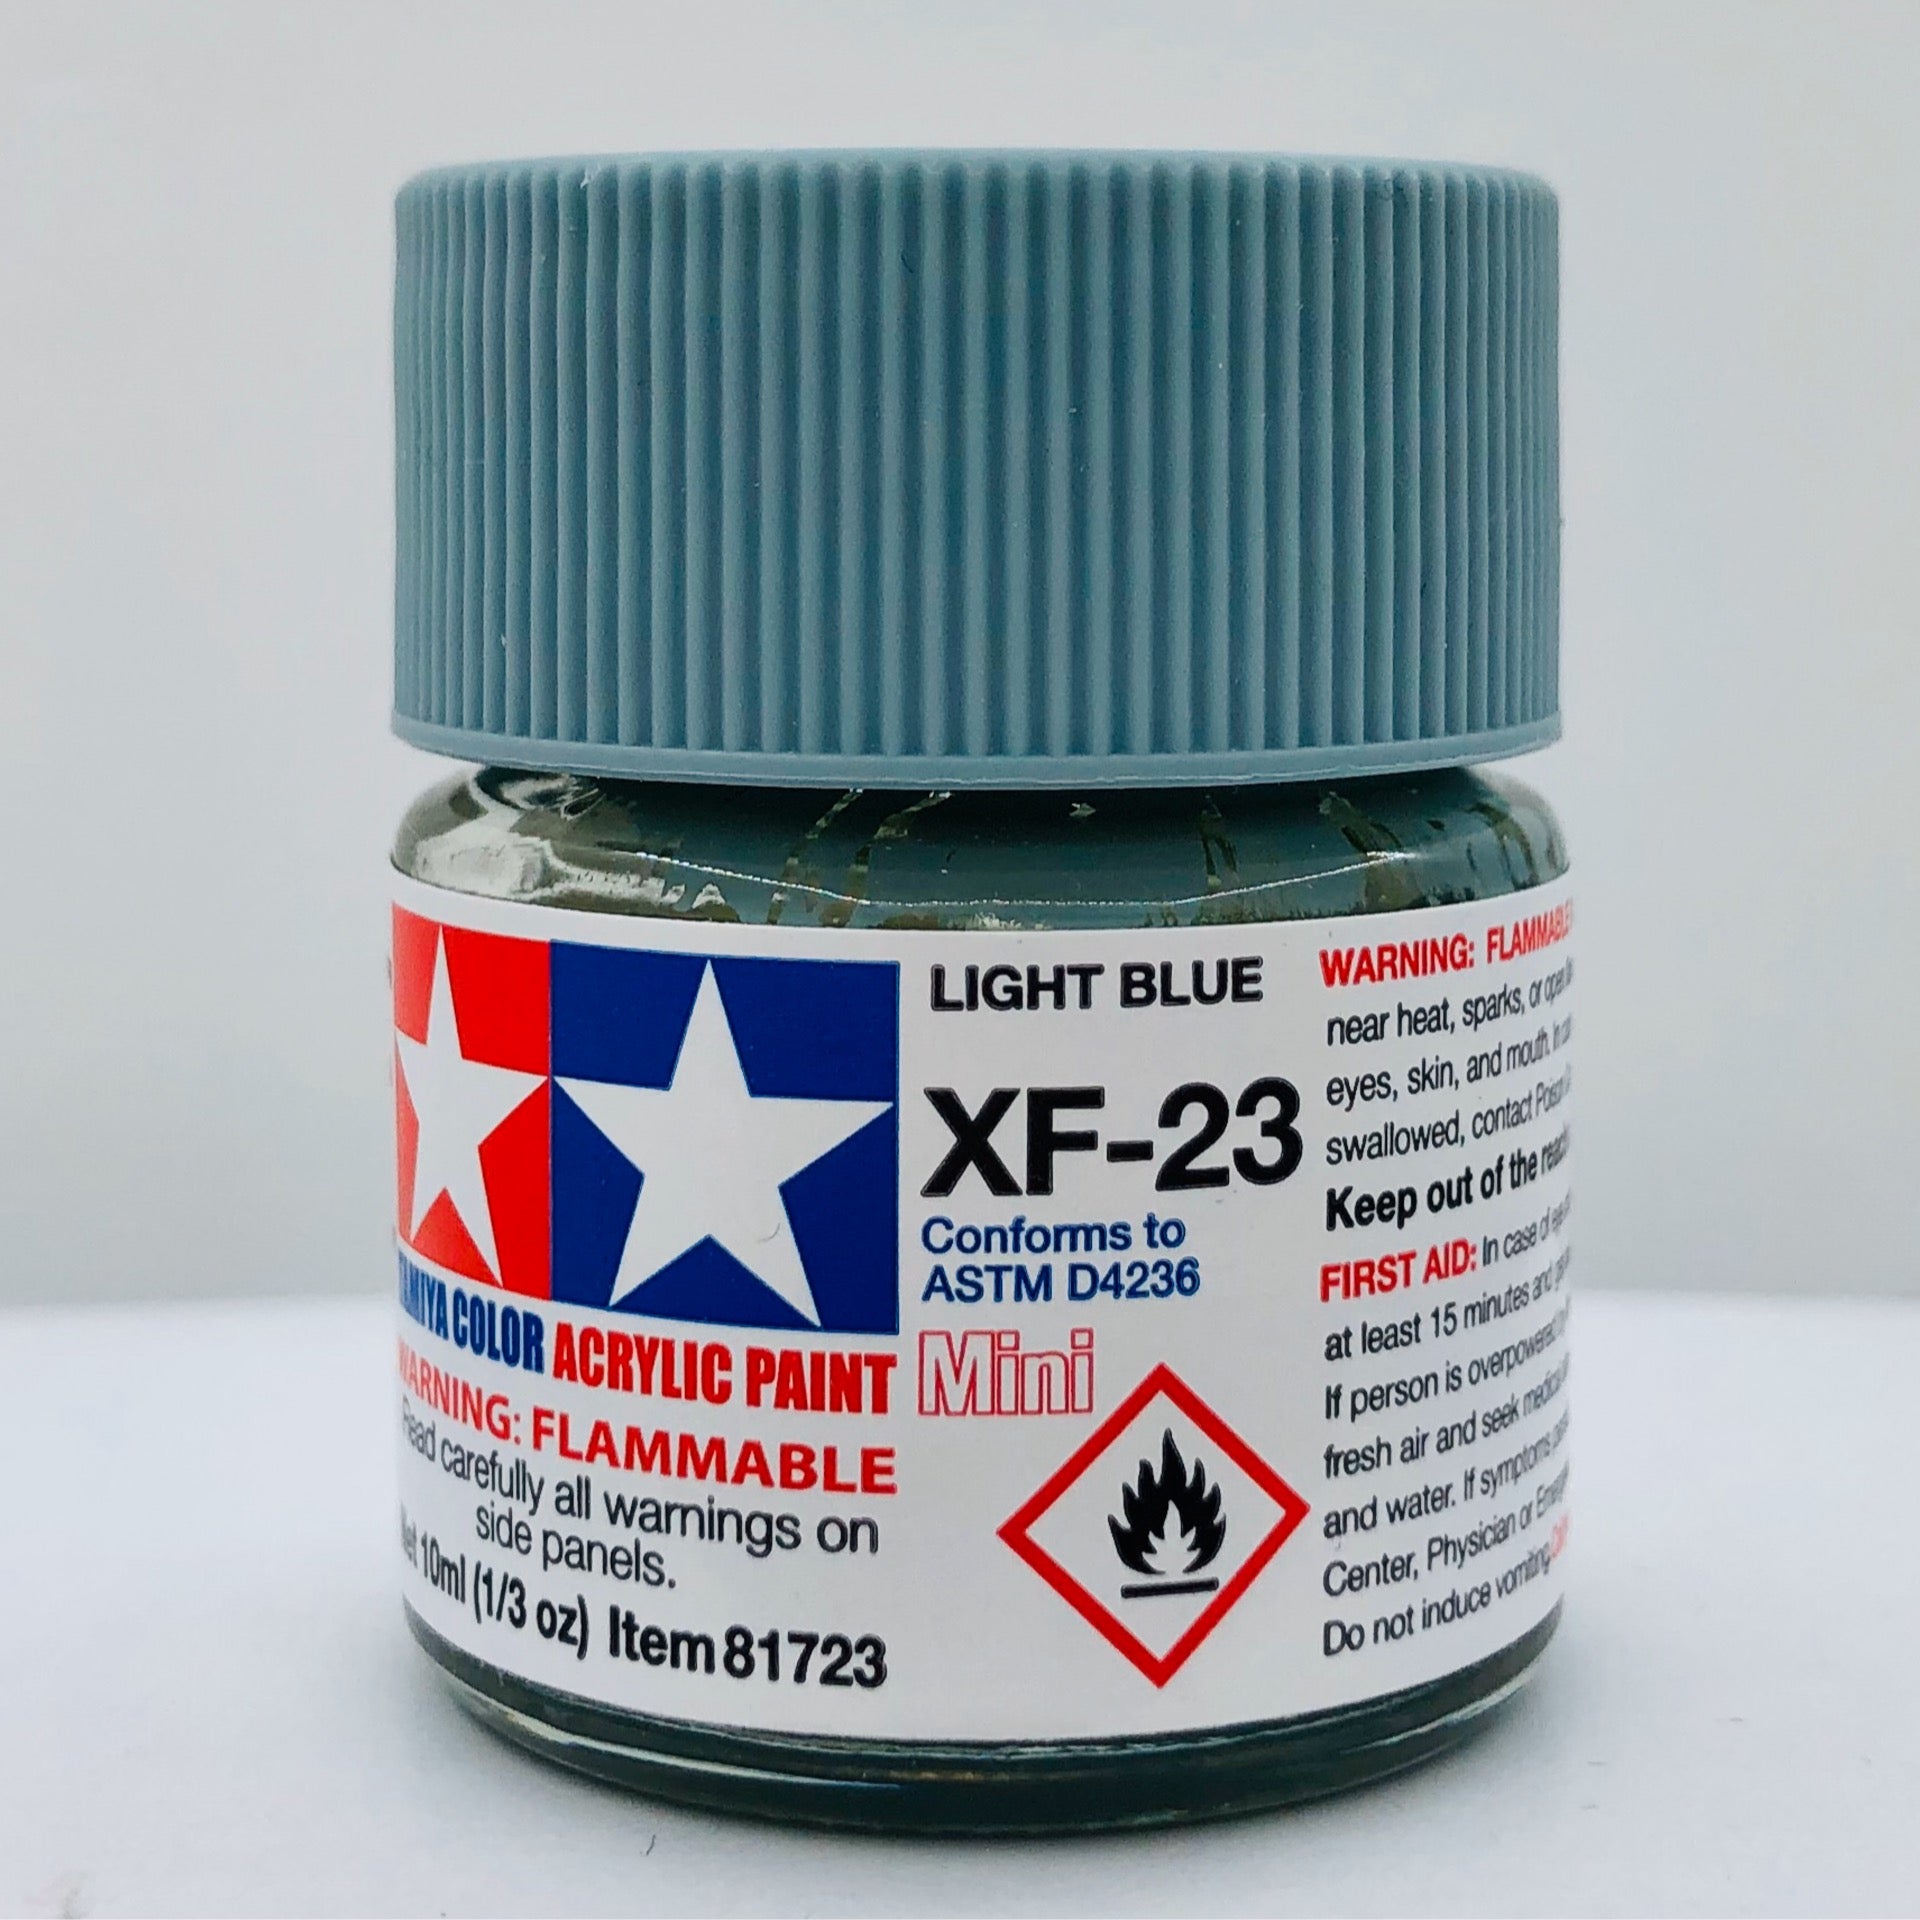 Tamiya XF-23 Light Blue